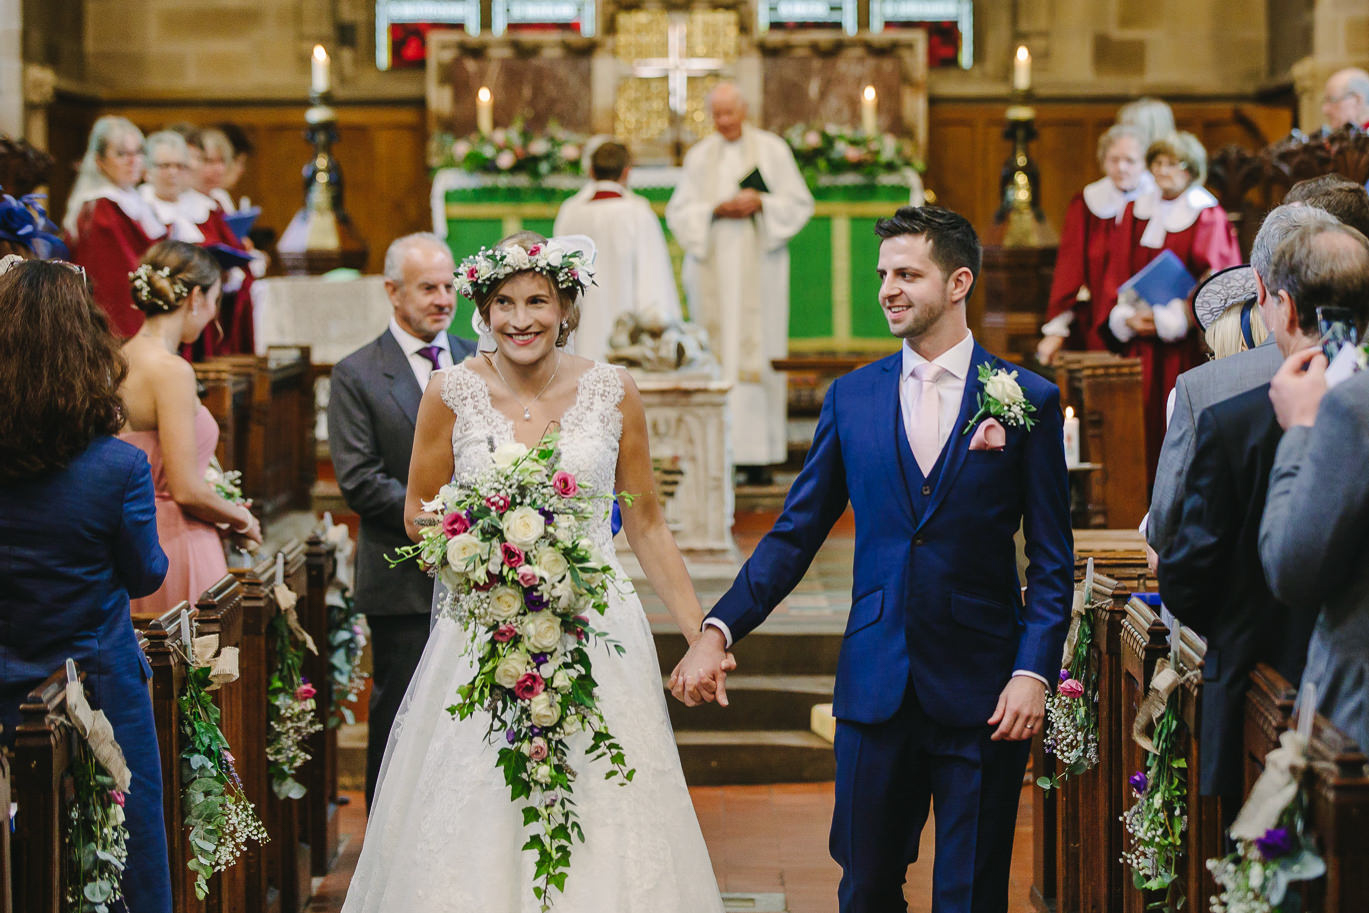 Bride and groom walking down aisle, church, wedding guests